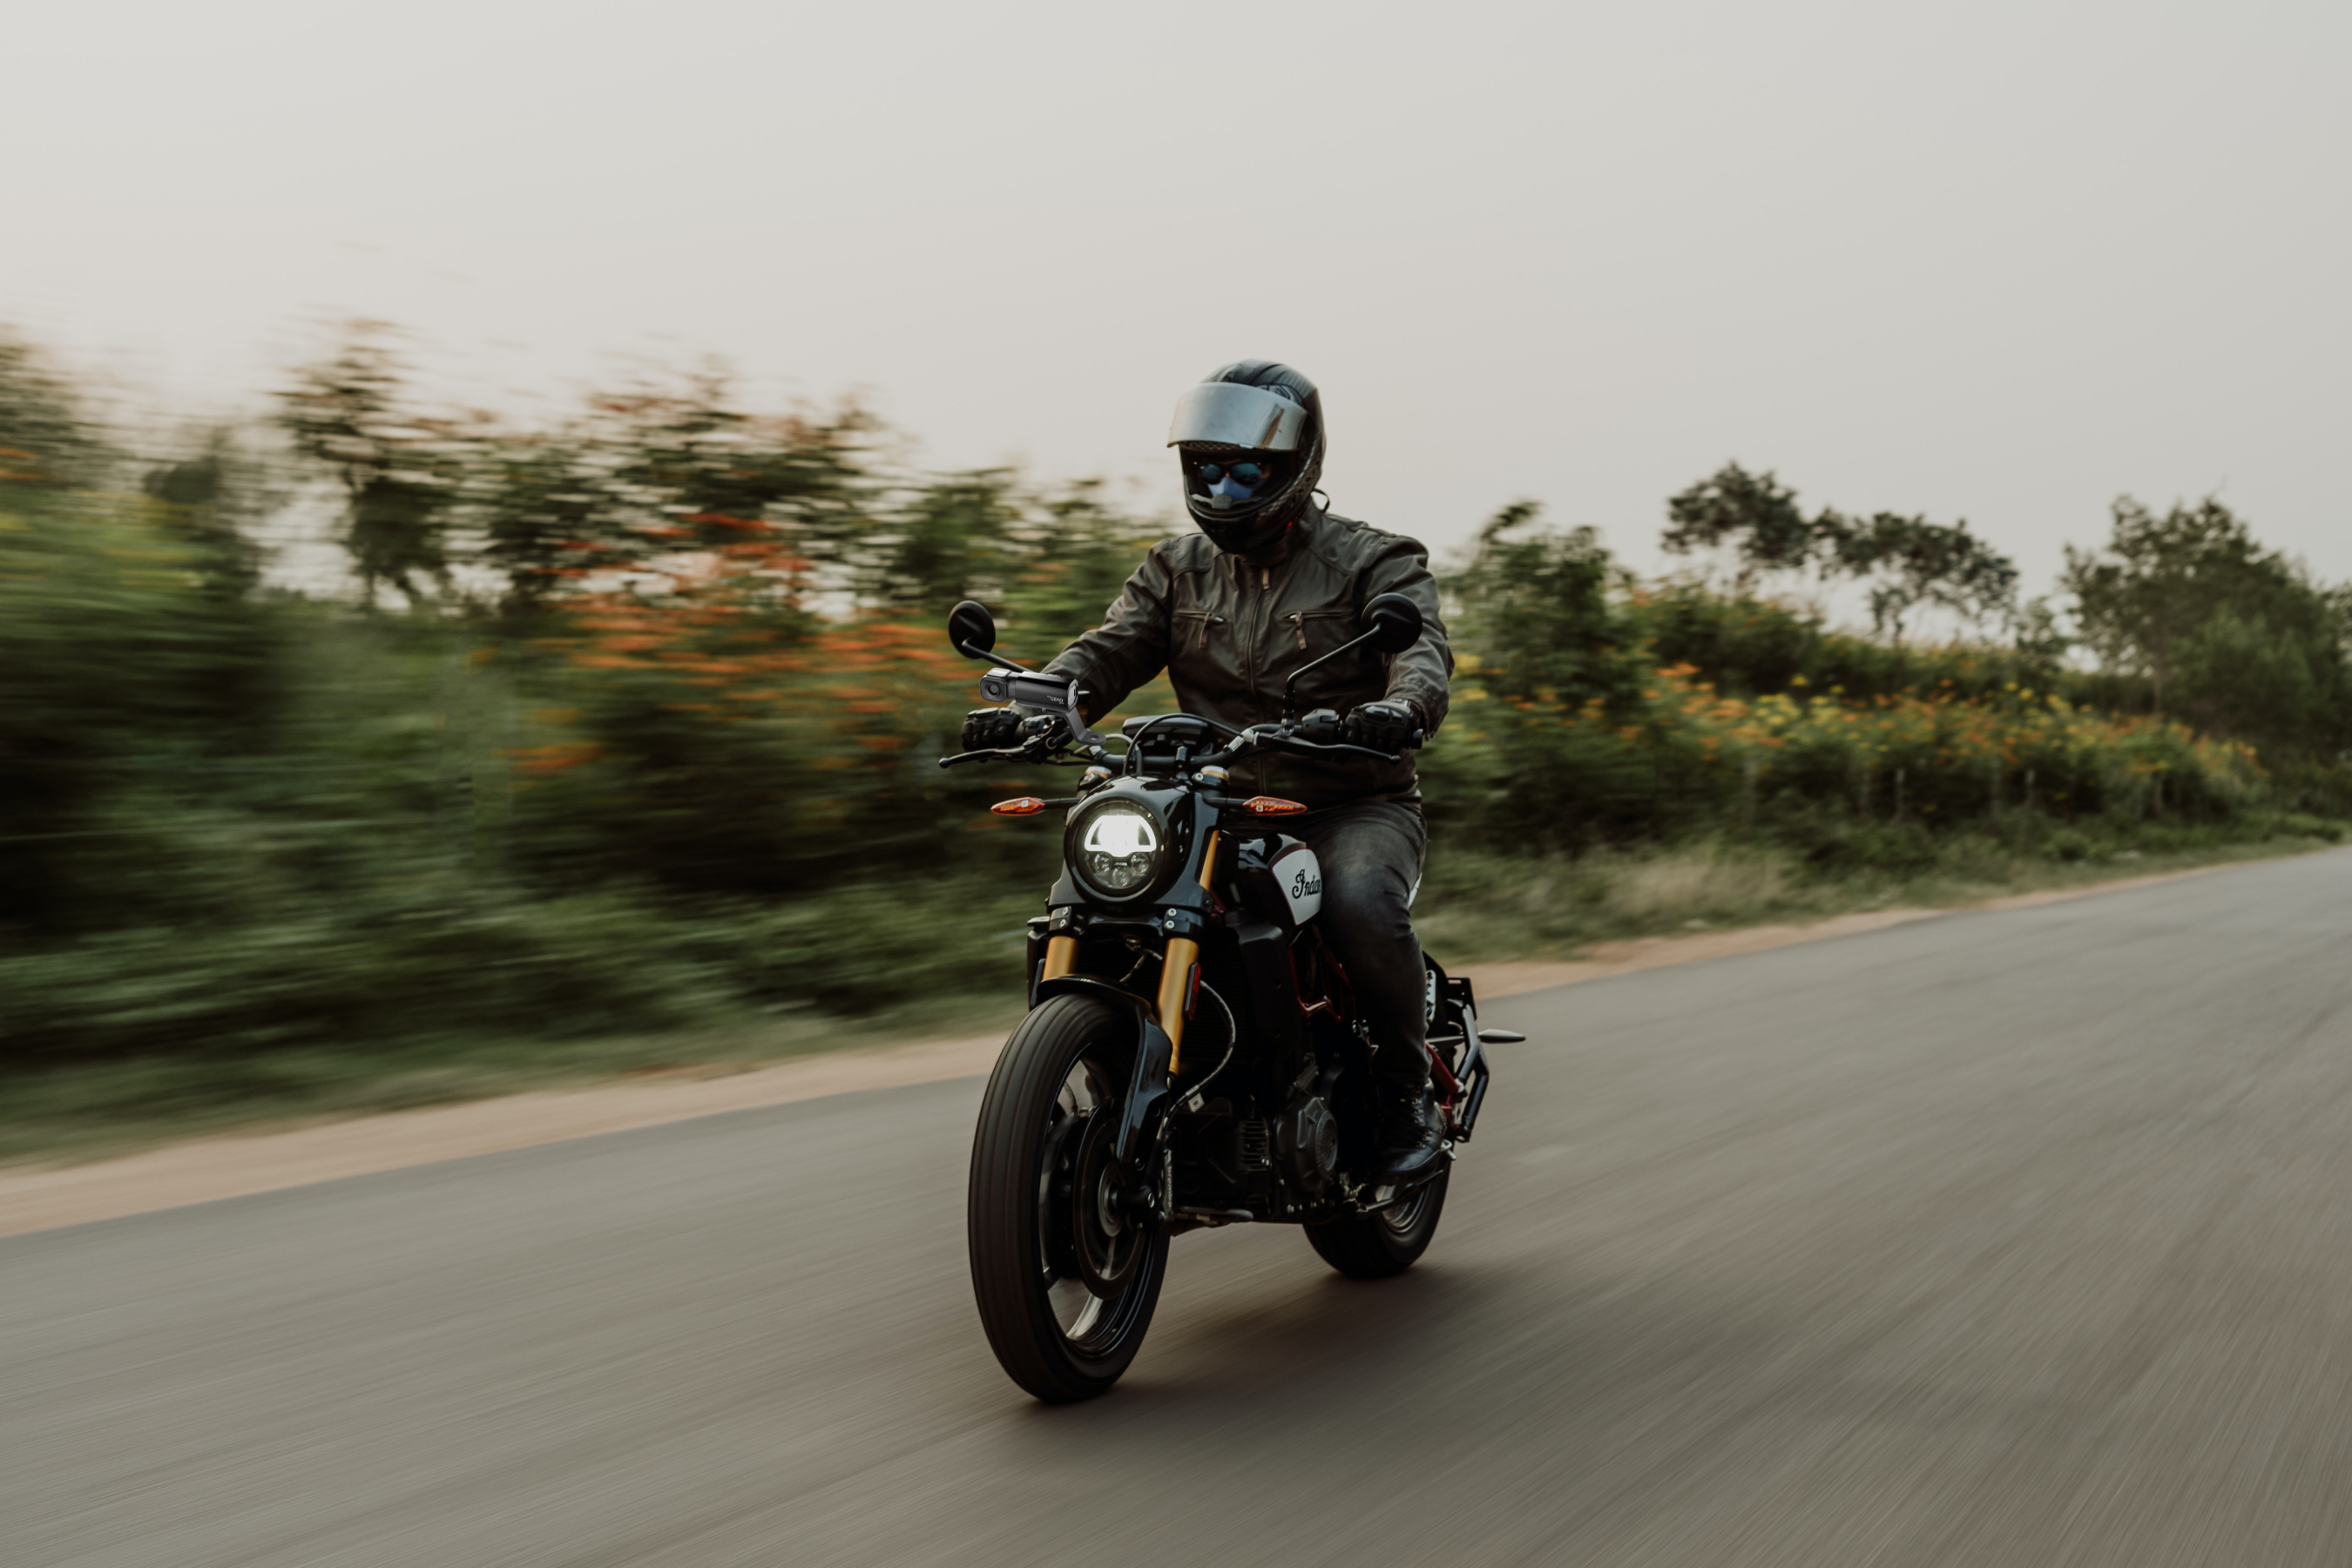 Mygekogear Moto Snap 1080P HD Motorcycle Dash Cam